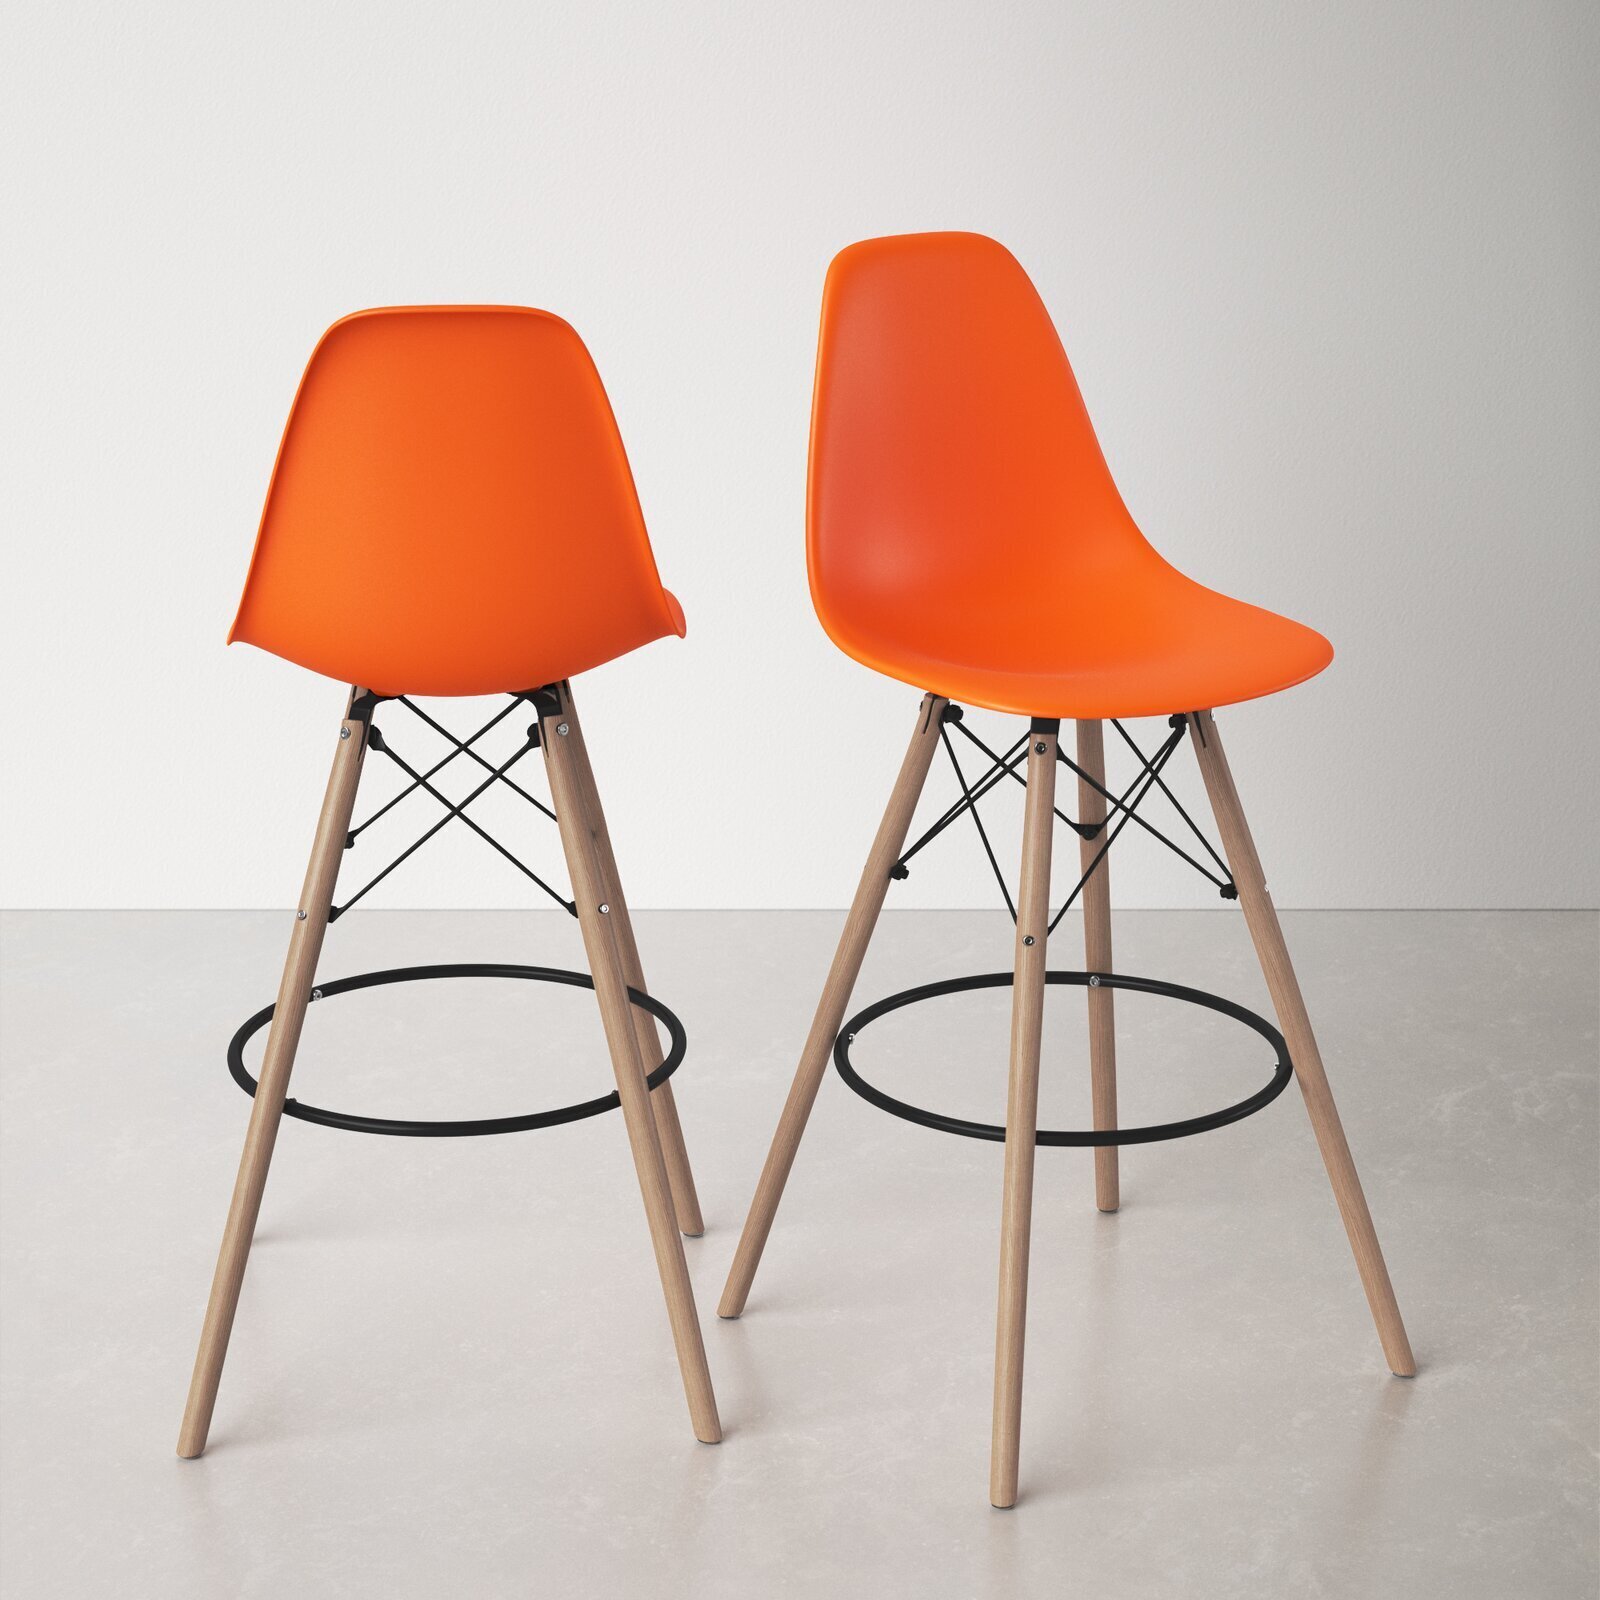 Orange bar stools with a backrest